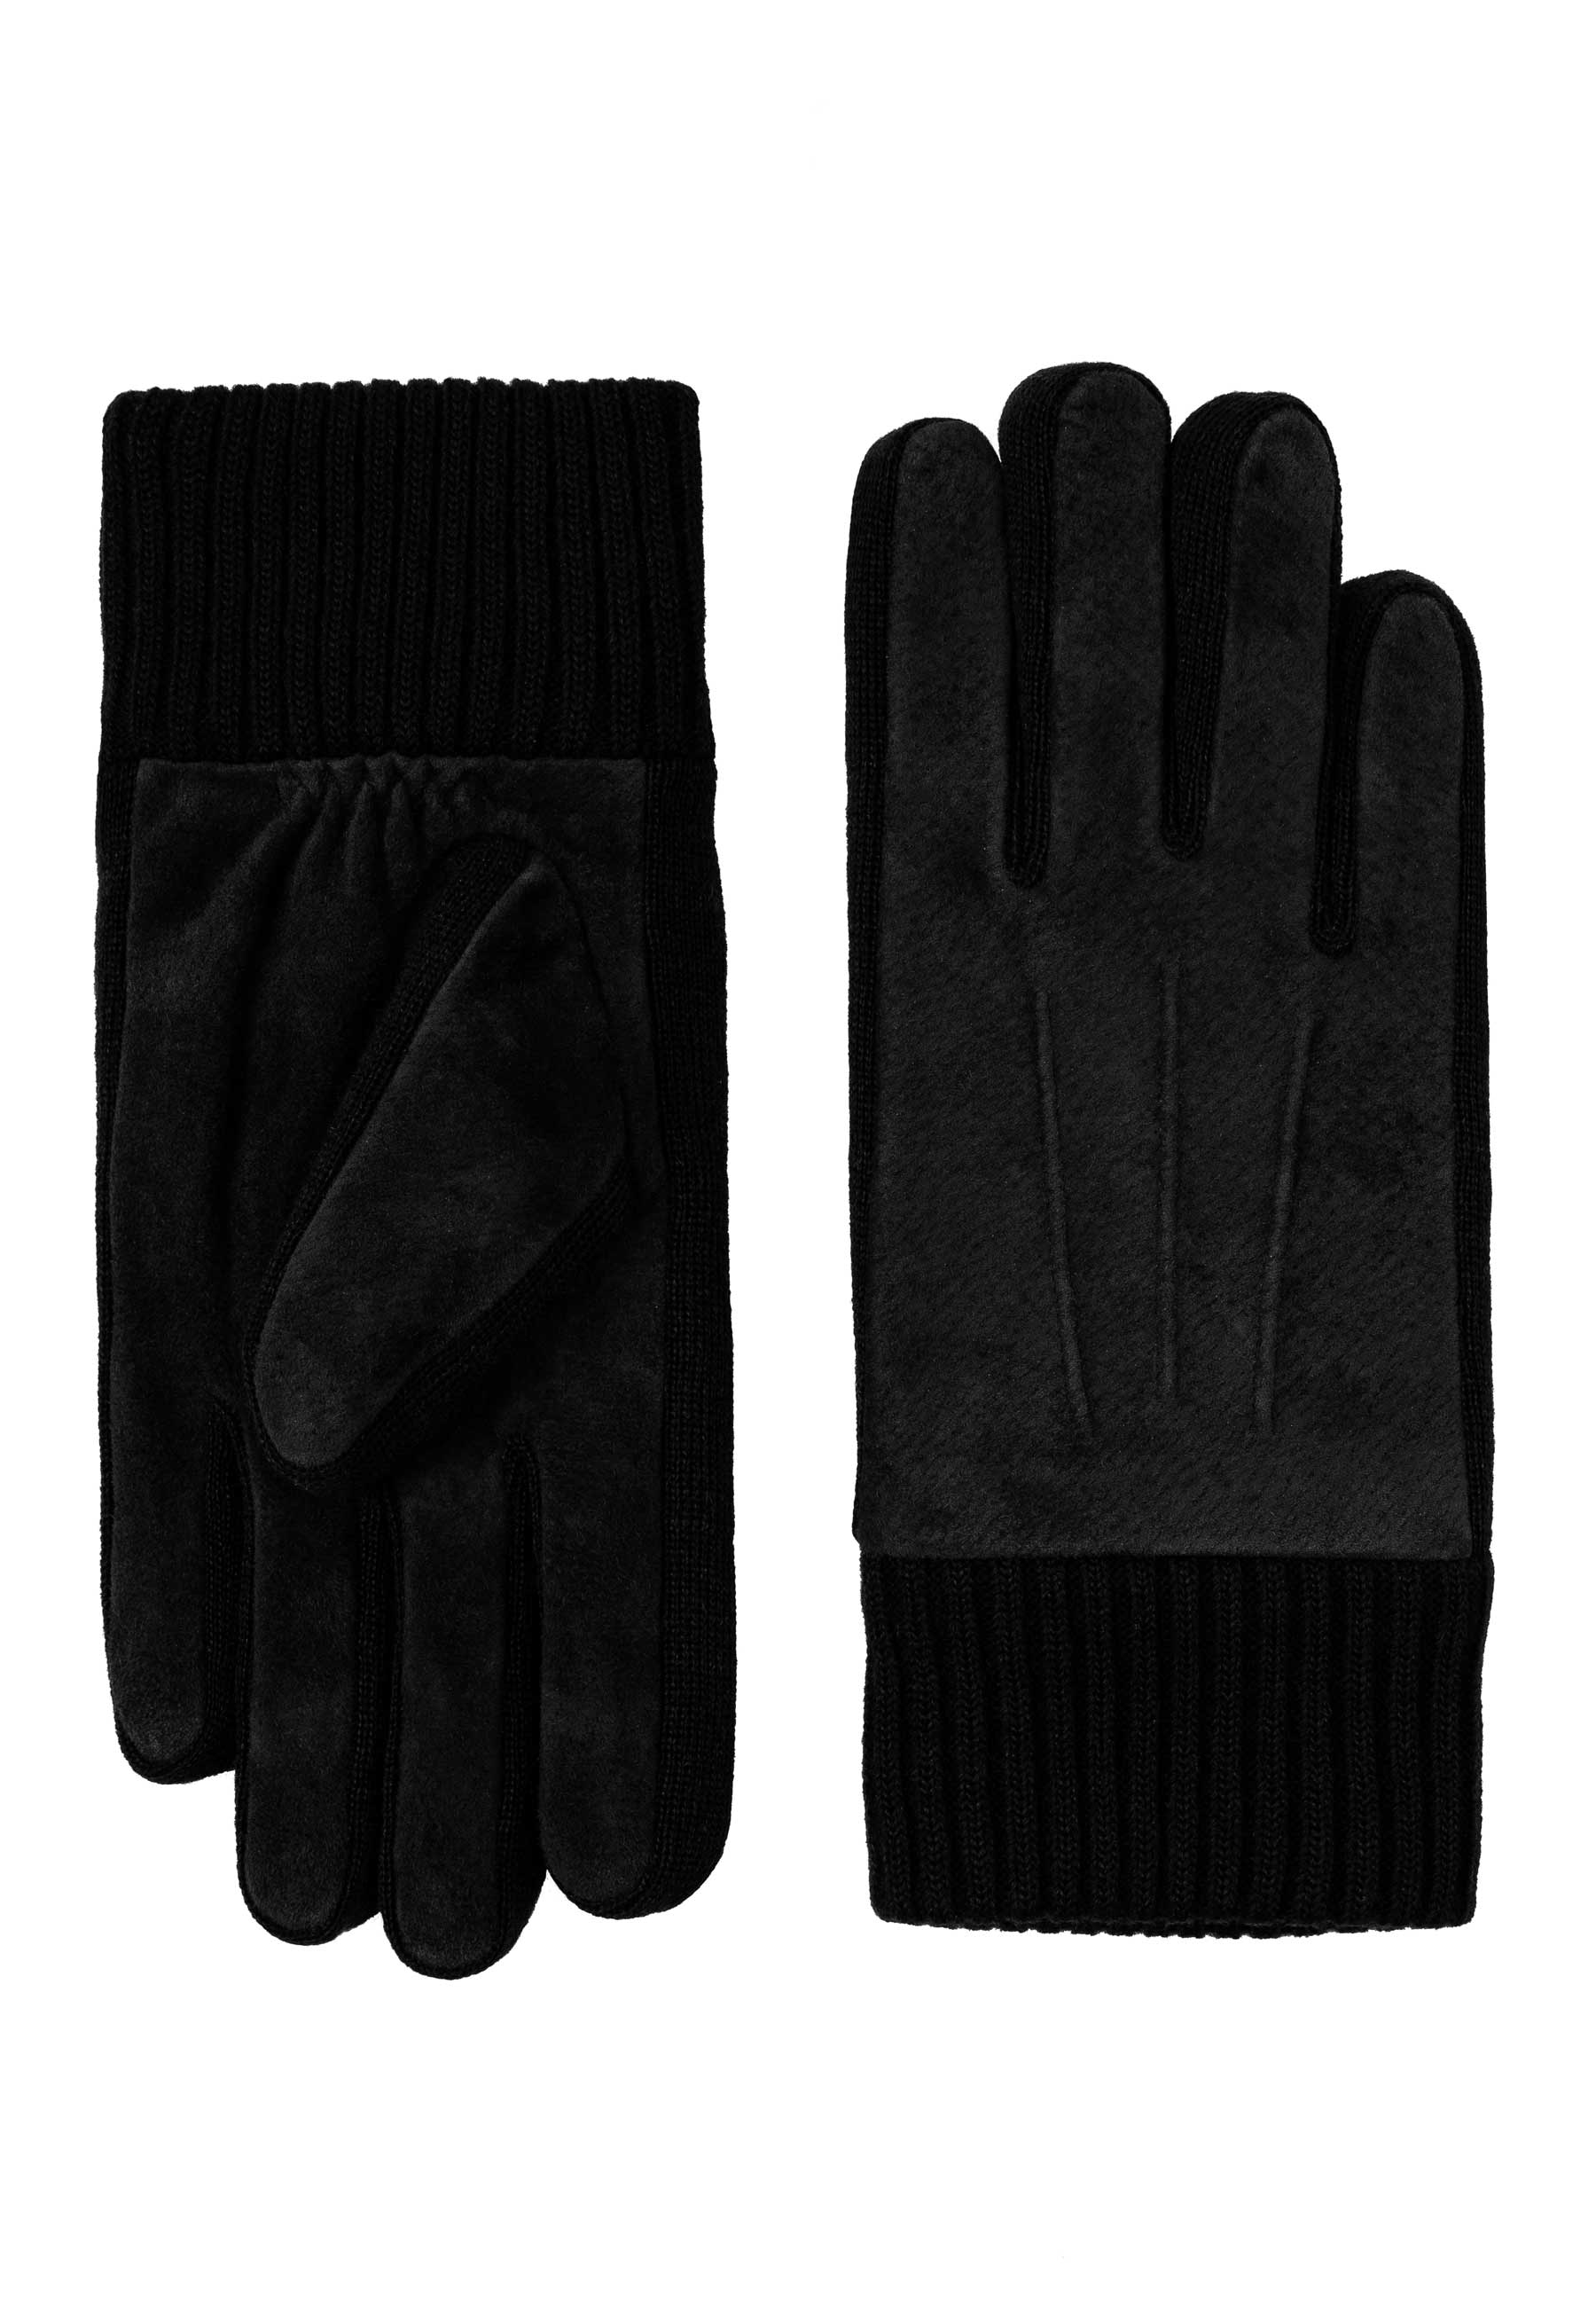 Men's gloves 'Stan' black